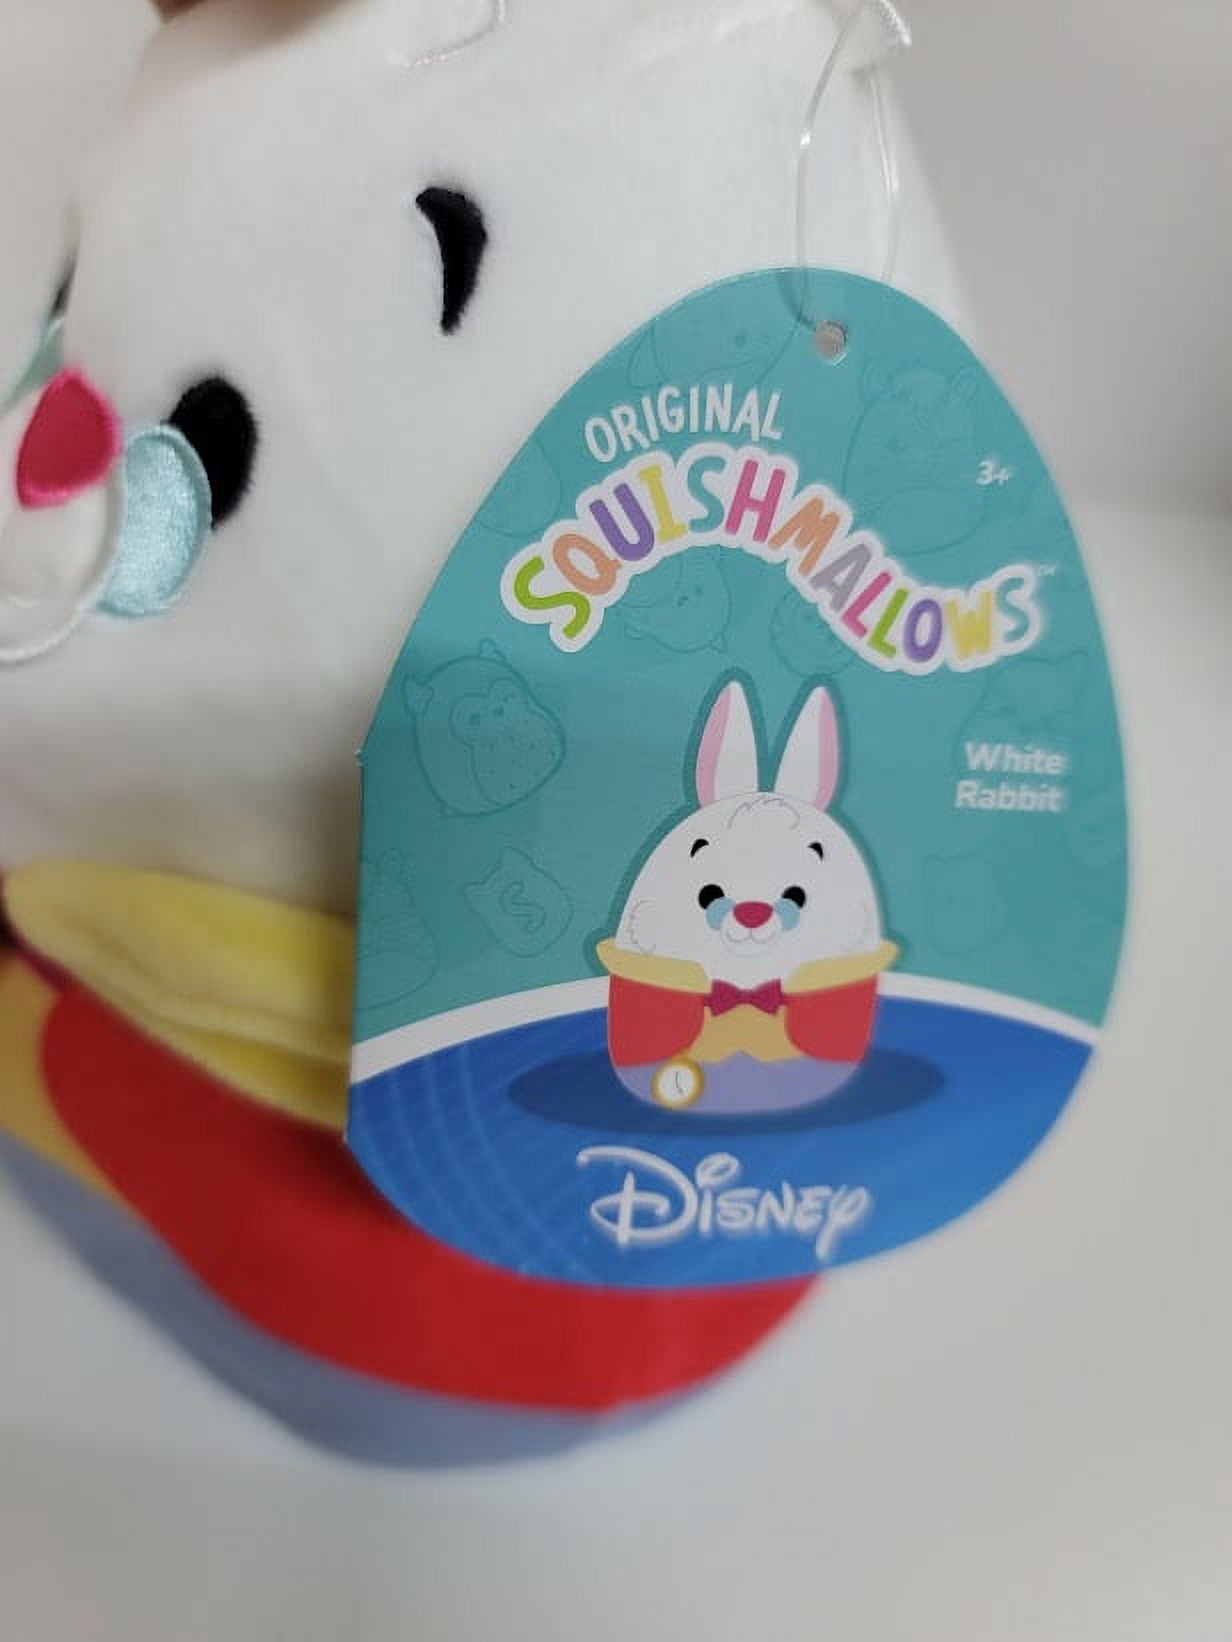 NEW Squishmallows White Rabbit 7.5 Plush - Disney's Alice in